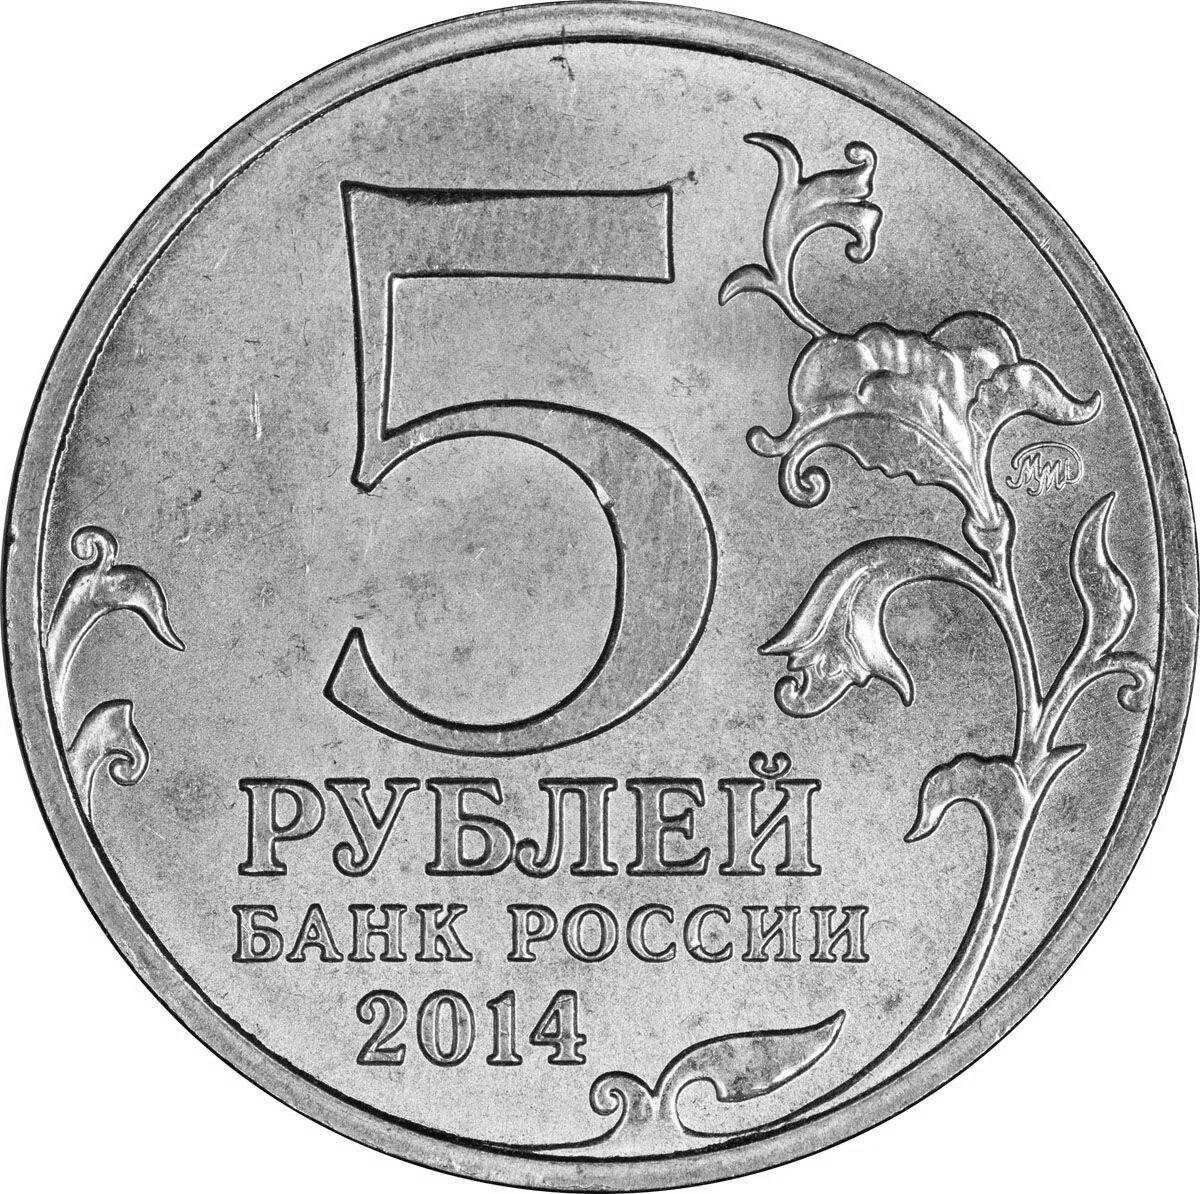 1 ruble #8